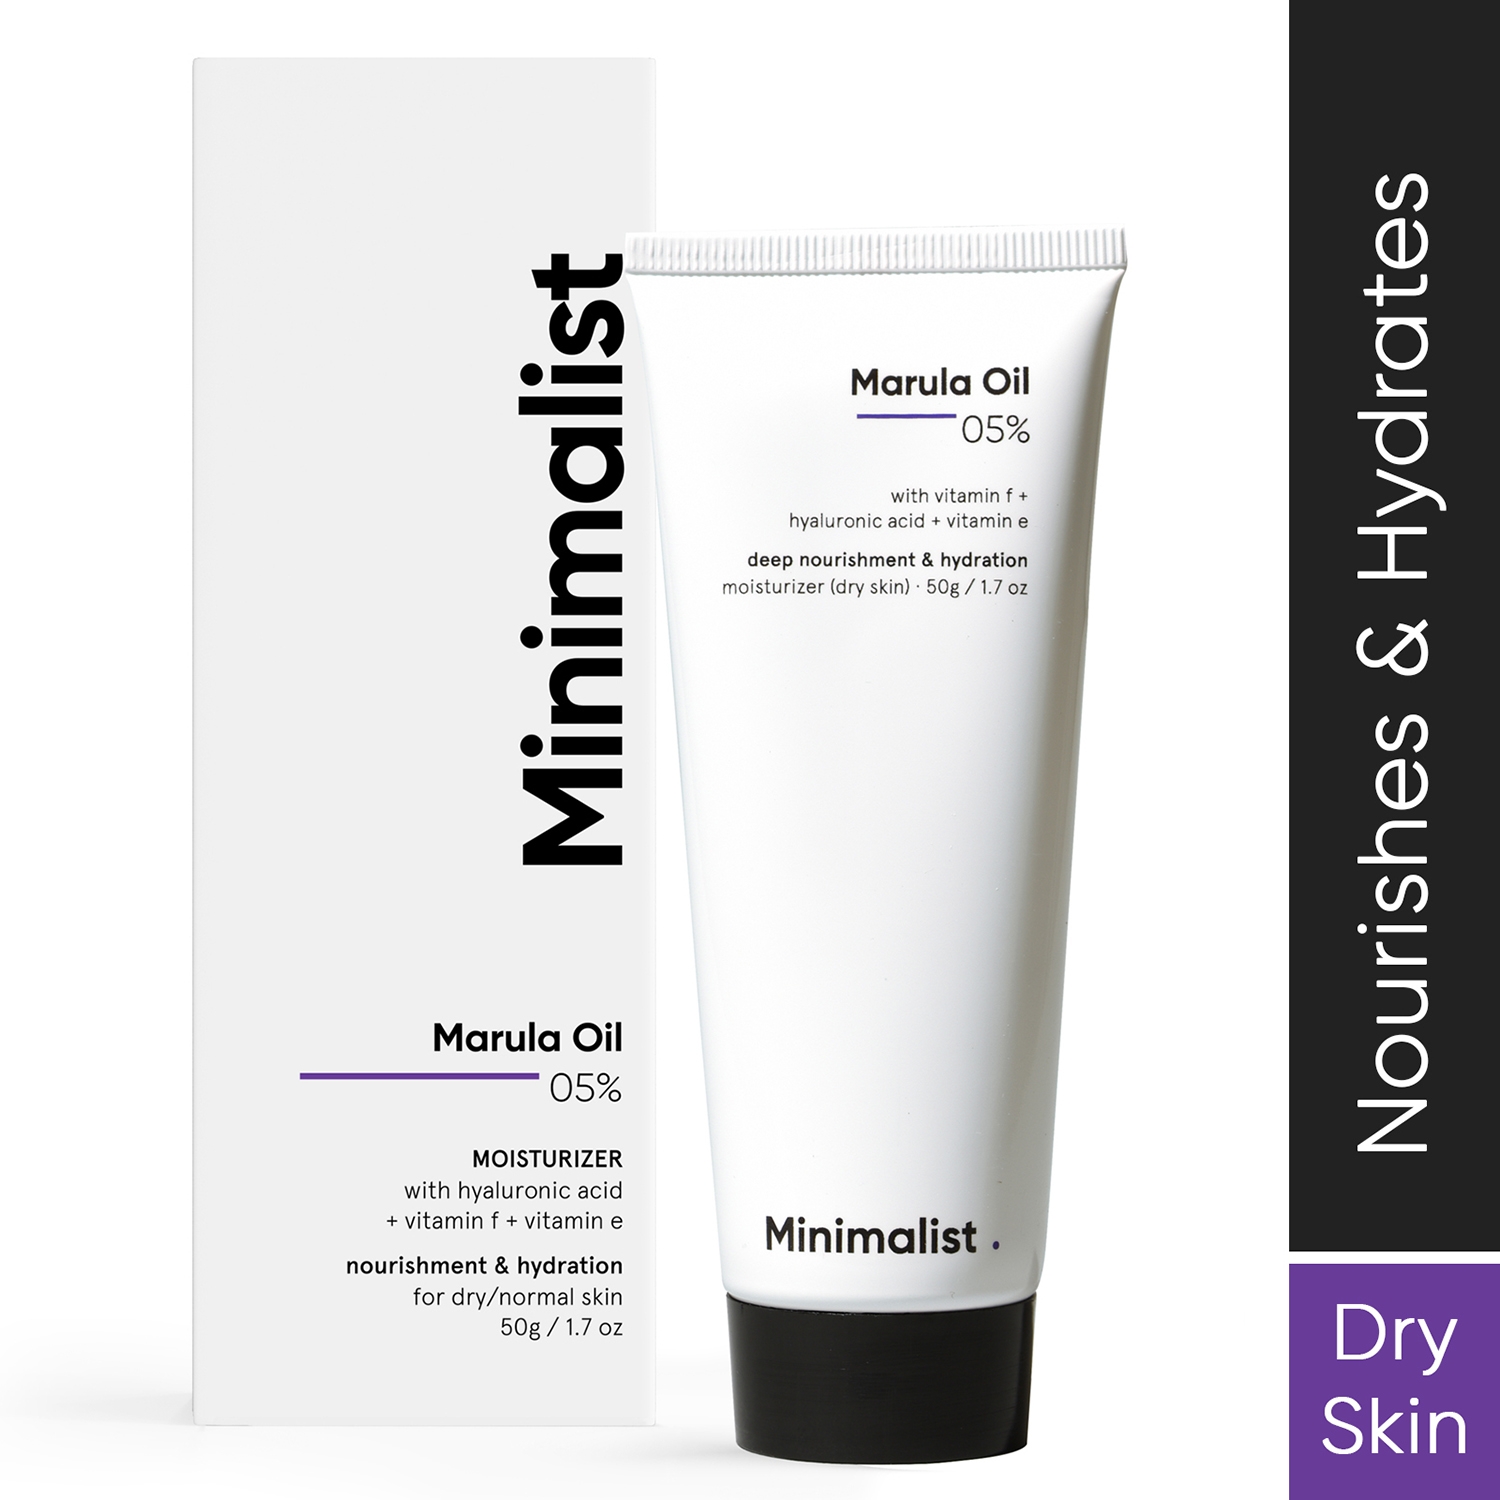 Minimalist | Minimalist 5% Marula Oil Face Moisturizer For Dry Skin Cream Hyaluronic Acid For Nourishment (50g)